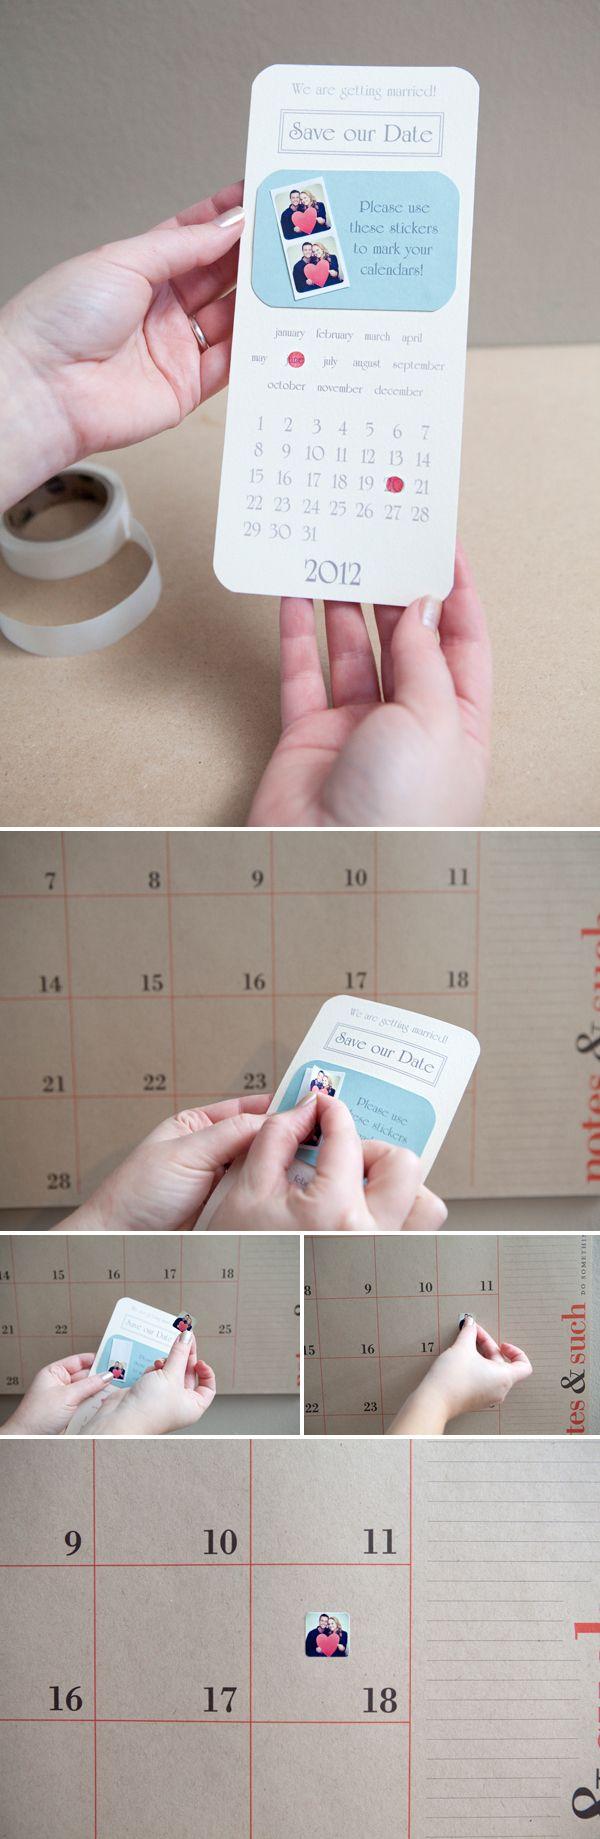 Hochzeit - How To Make Super Cute DIY Instagram Save The Date Invitations!